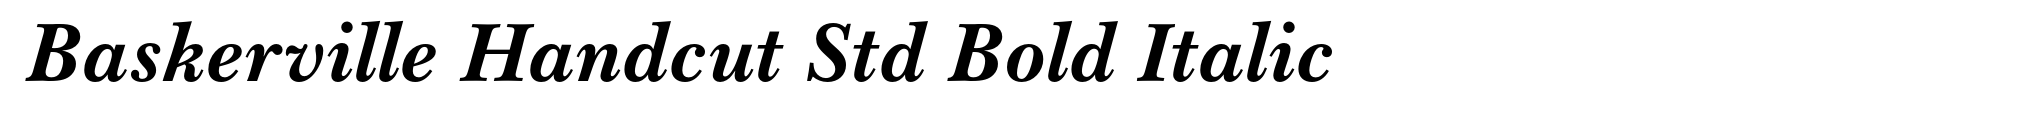 Baskerville Handcut Std Bold Italic image